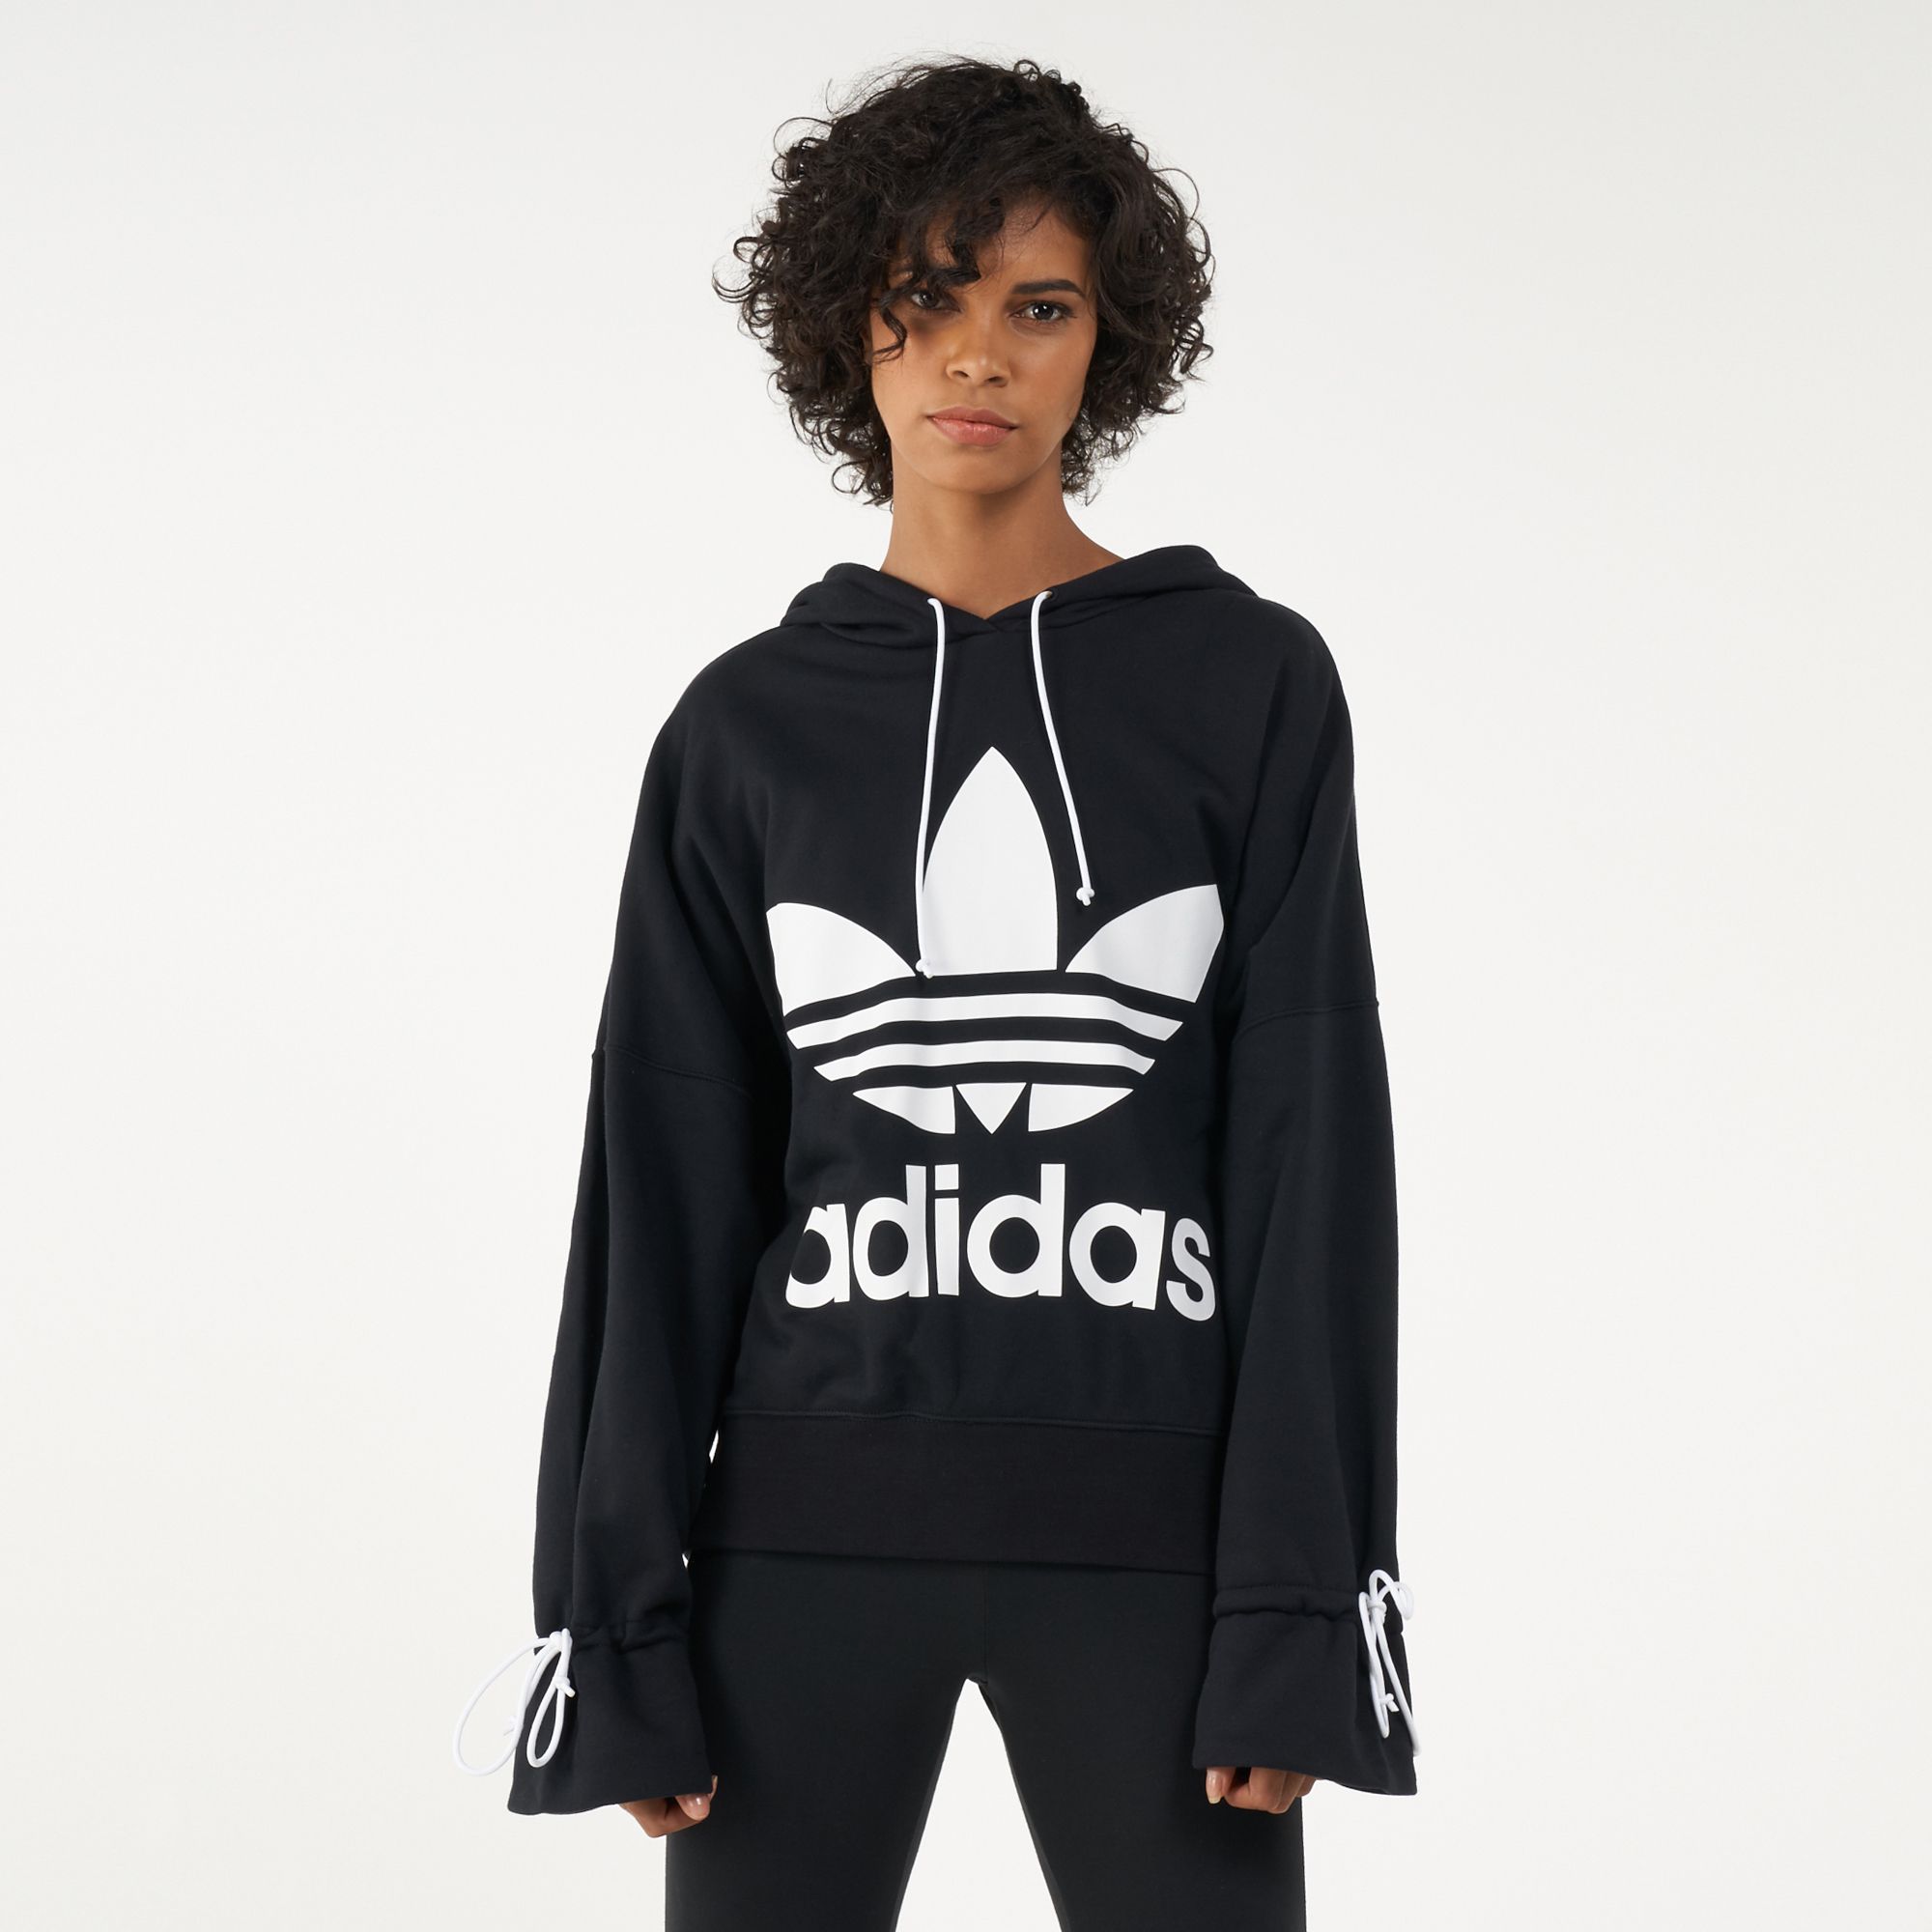 adidas trefoil hoodie women's sale